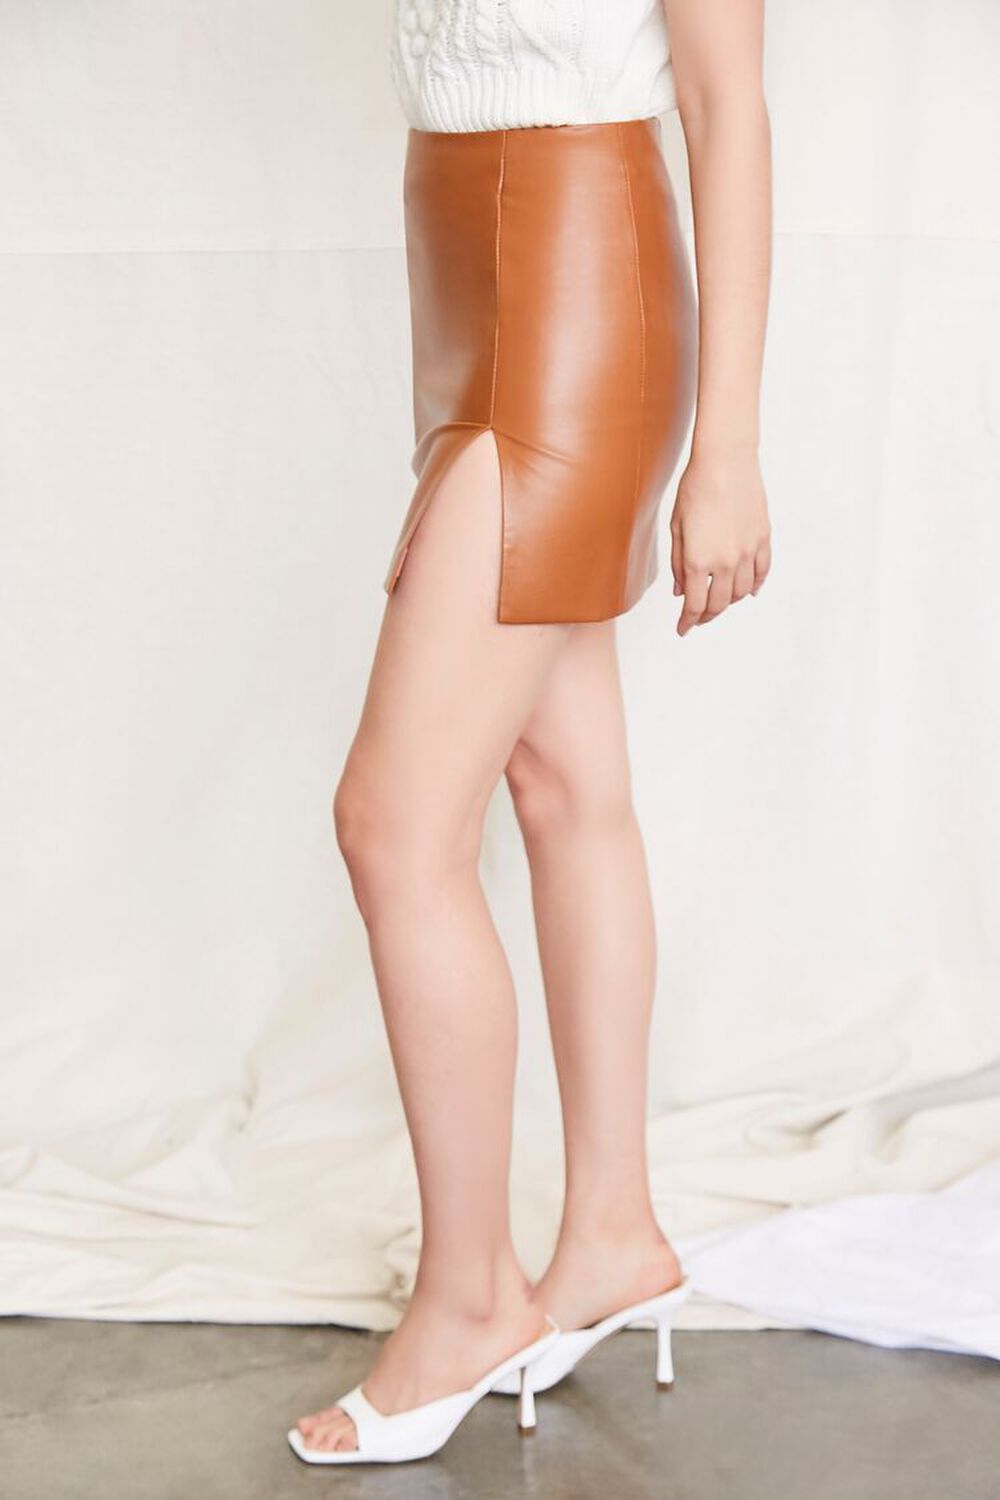 CHOCOLATE Faux Leather Mini Skirt, image 3